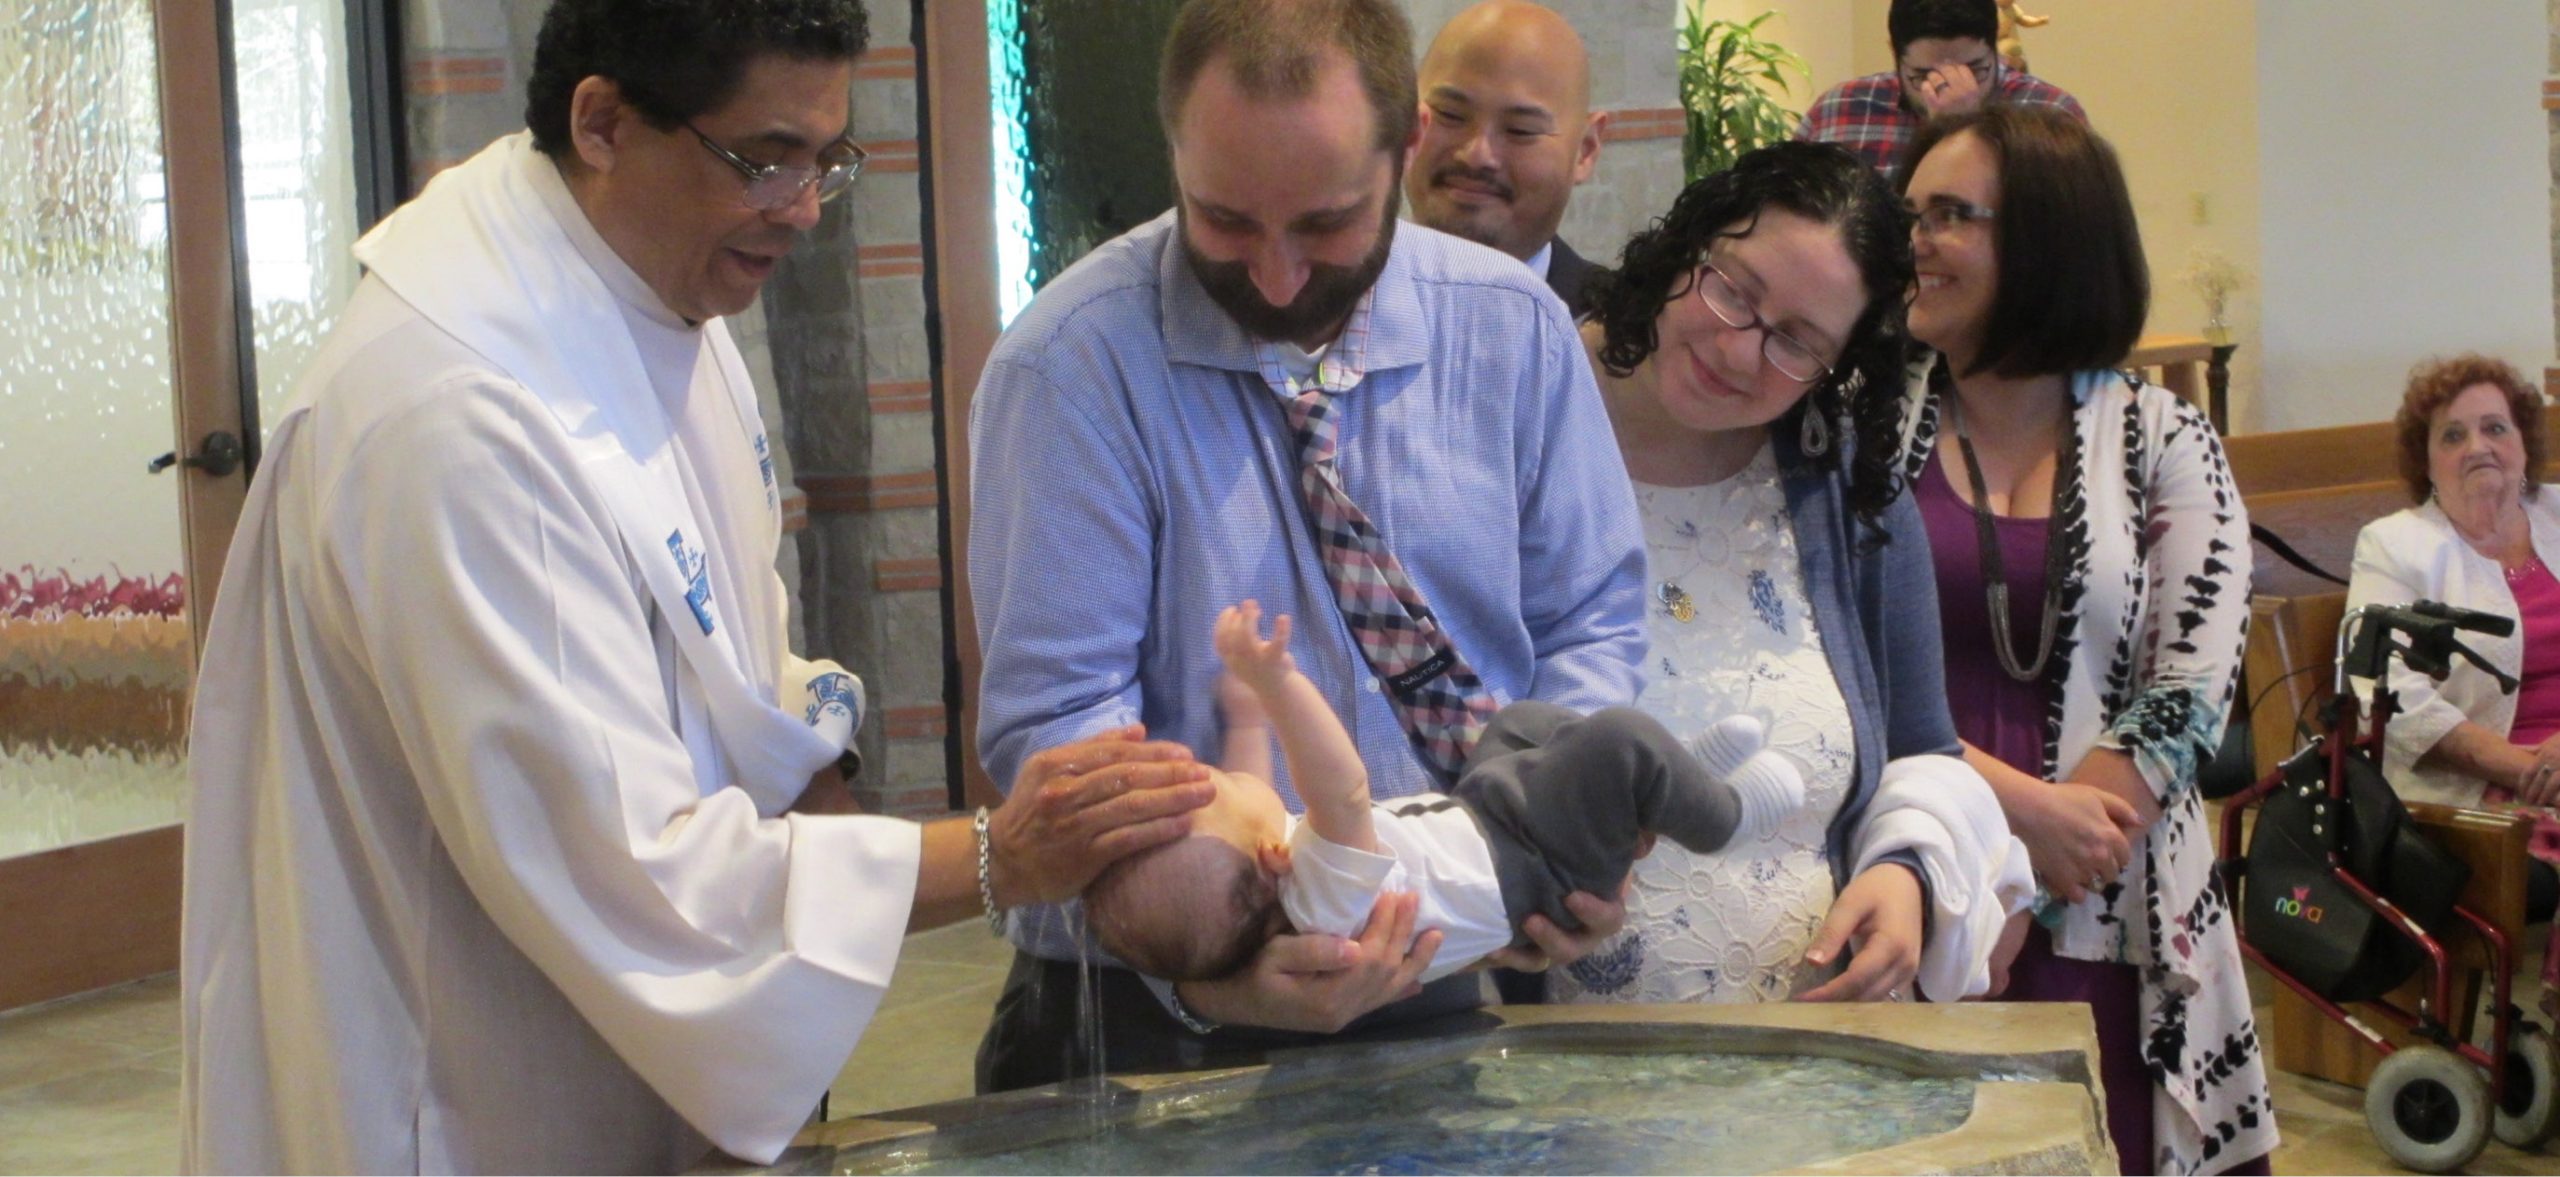 Fr. Tony baptism